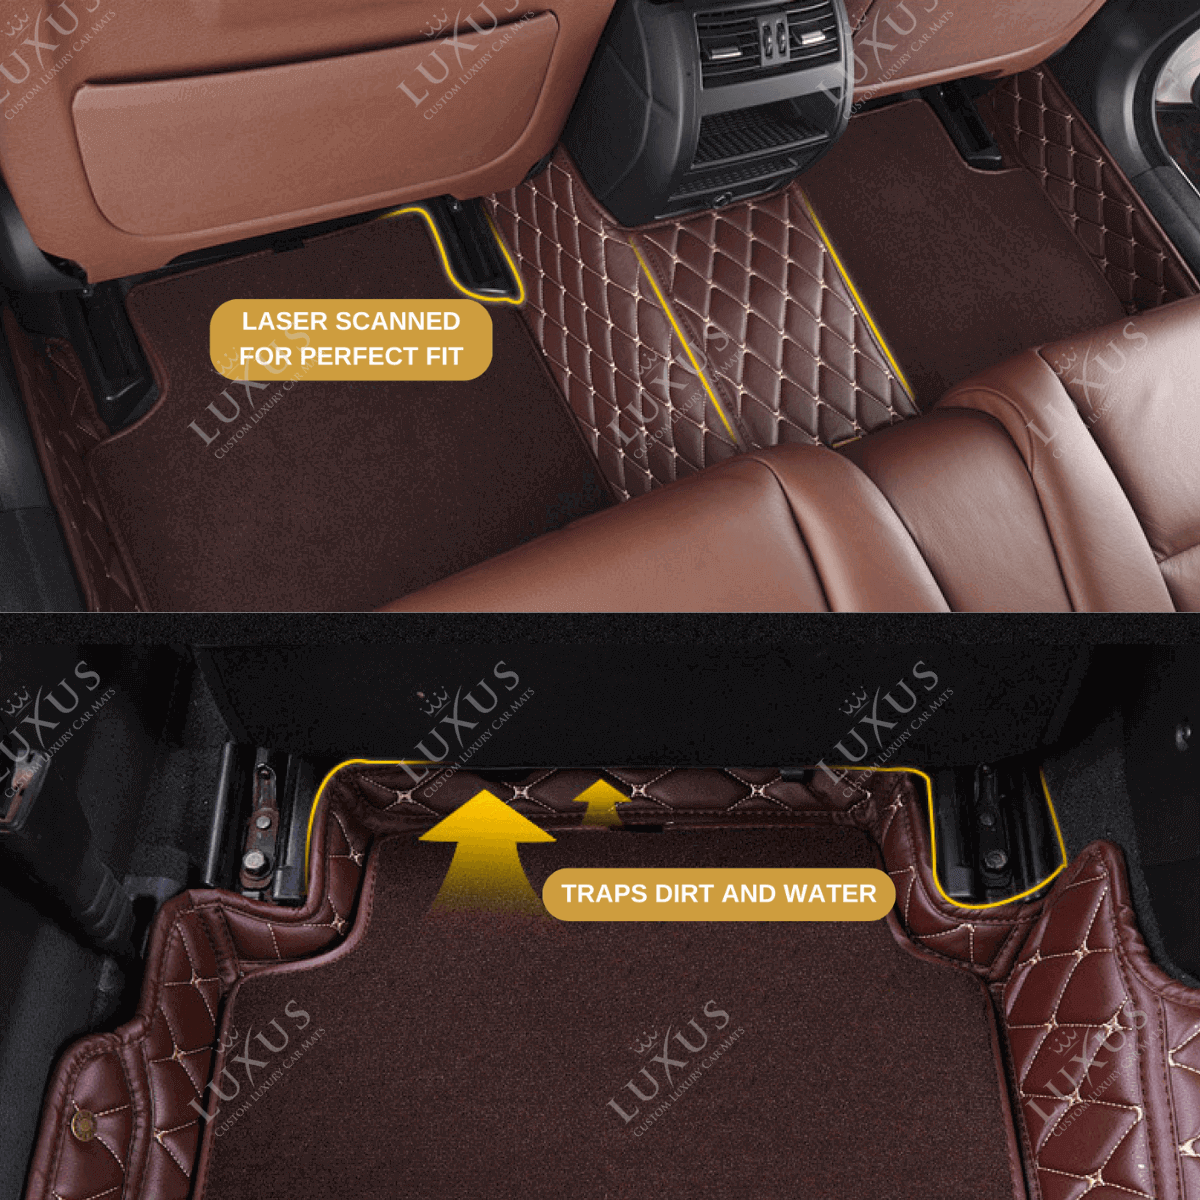 Black & White Stitching Honeycomb Base & Red Top Carpet Double Layer Luxury Car Mats Set